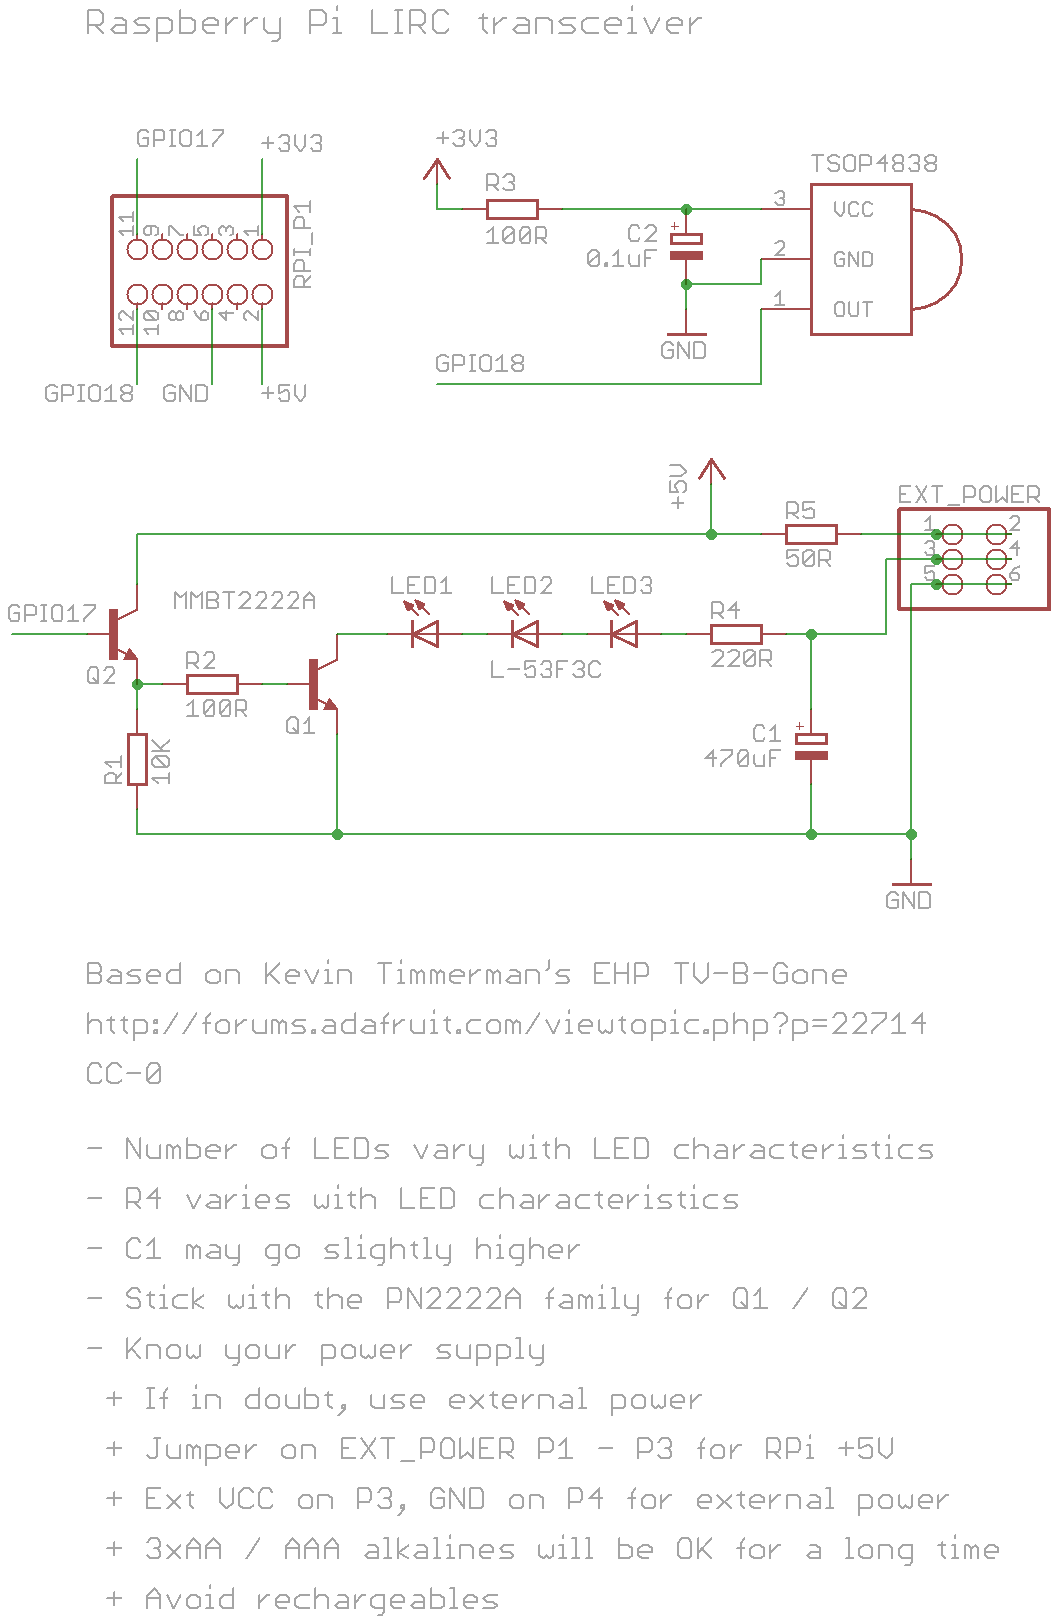 Transreceiver schematic